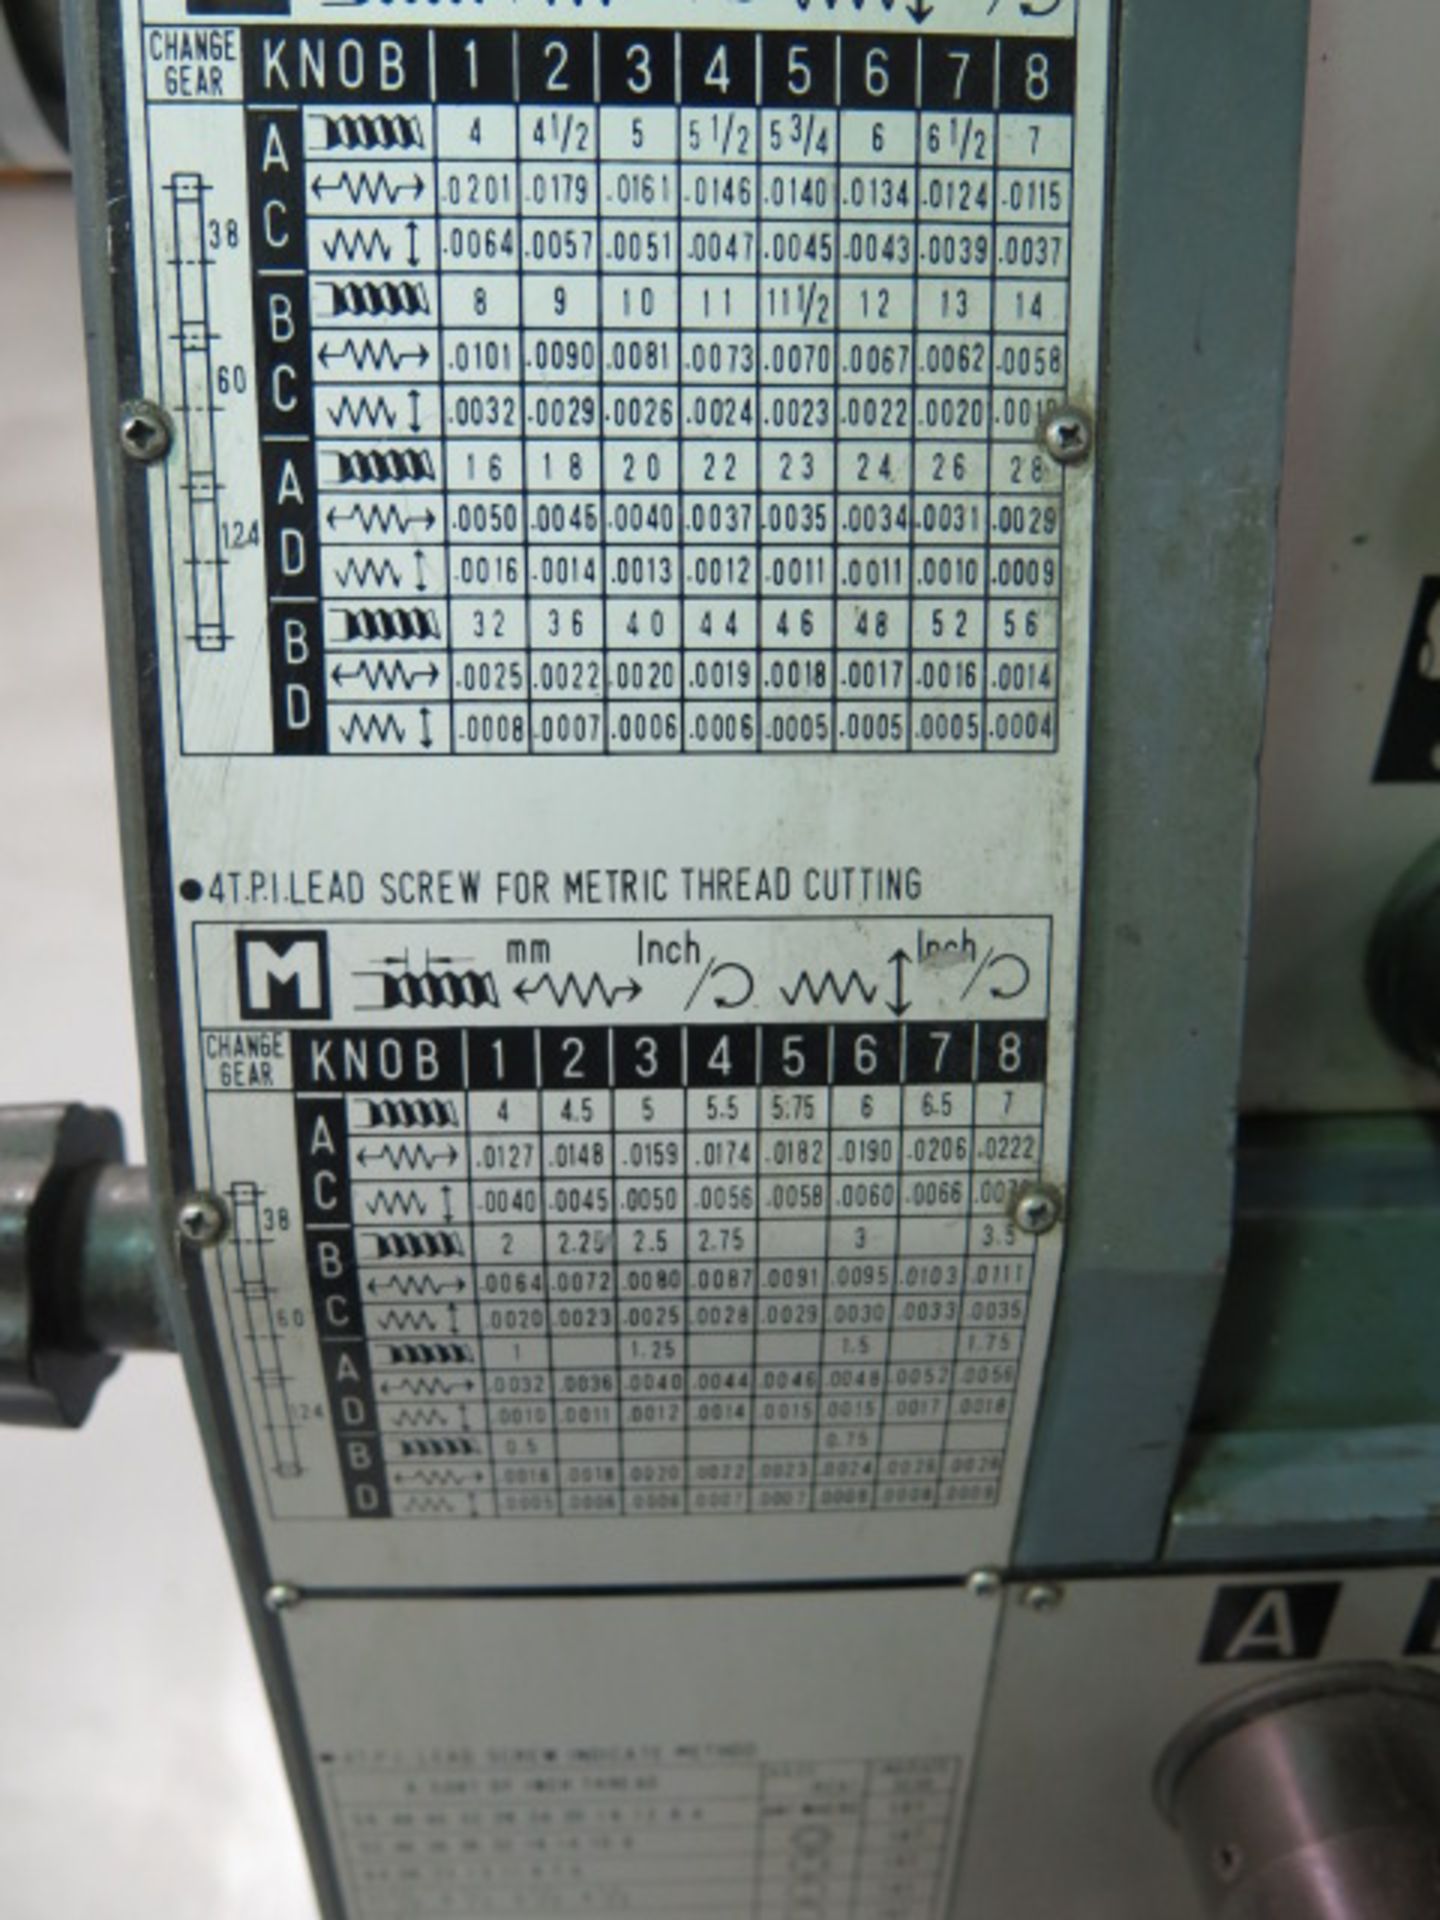 Acra Turn 16x40 16” x 40” Geared Head Lathe s/n 5010 w/ Sony DRO, 23-1800 RPM, Inch/mm Threading, - Image 8 of 11